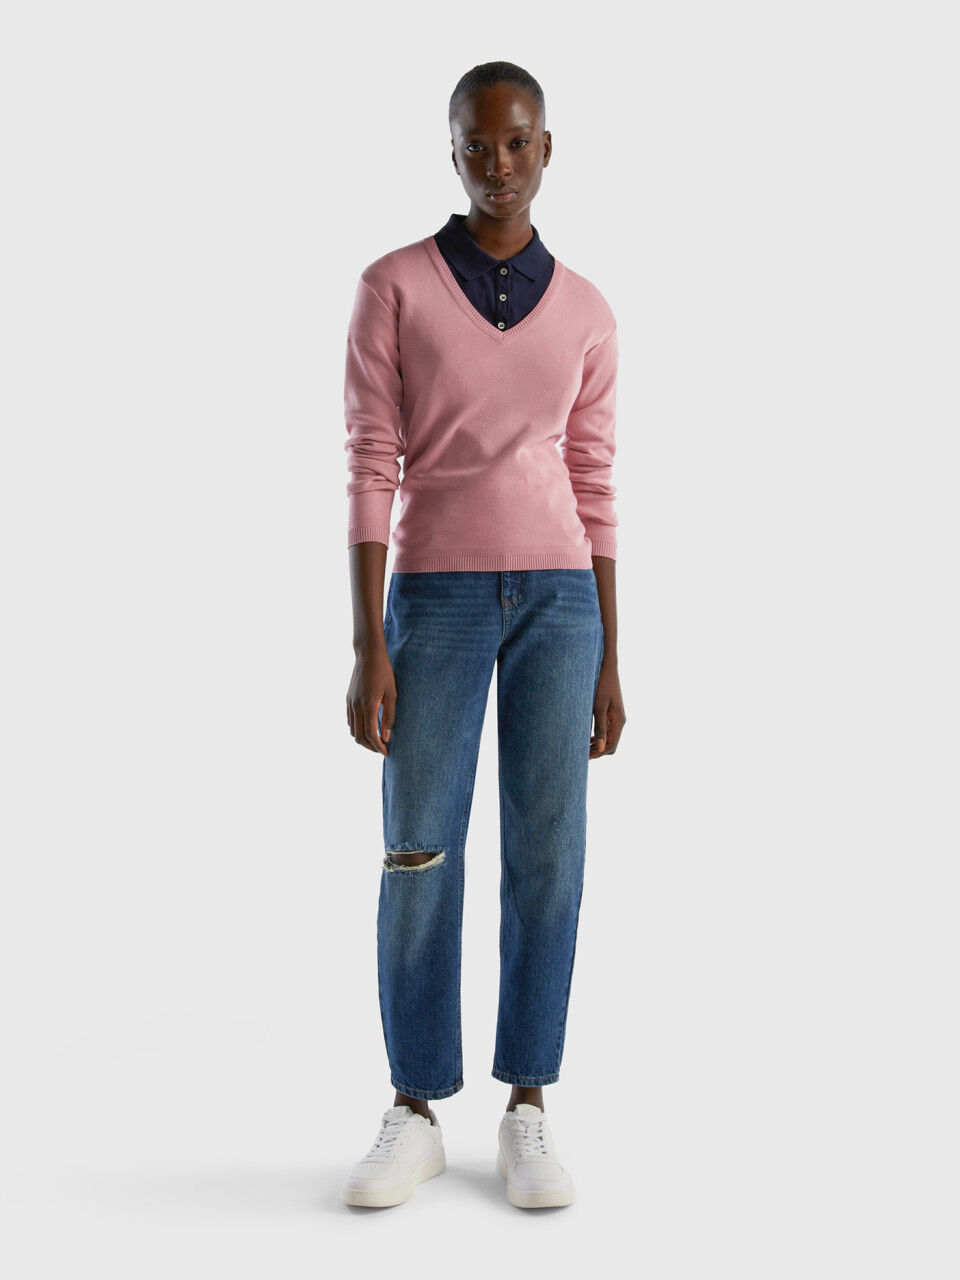 V-neck sweater in pure cotton